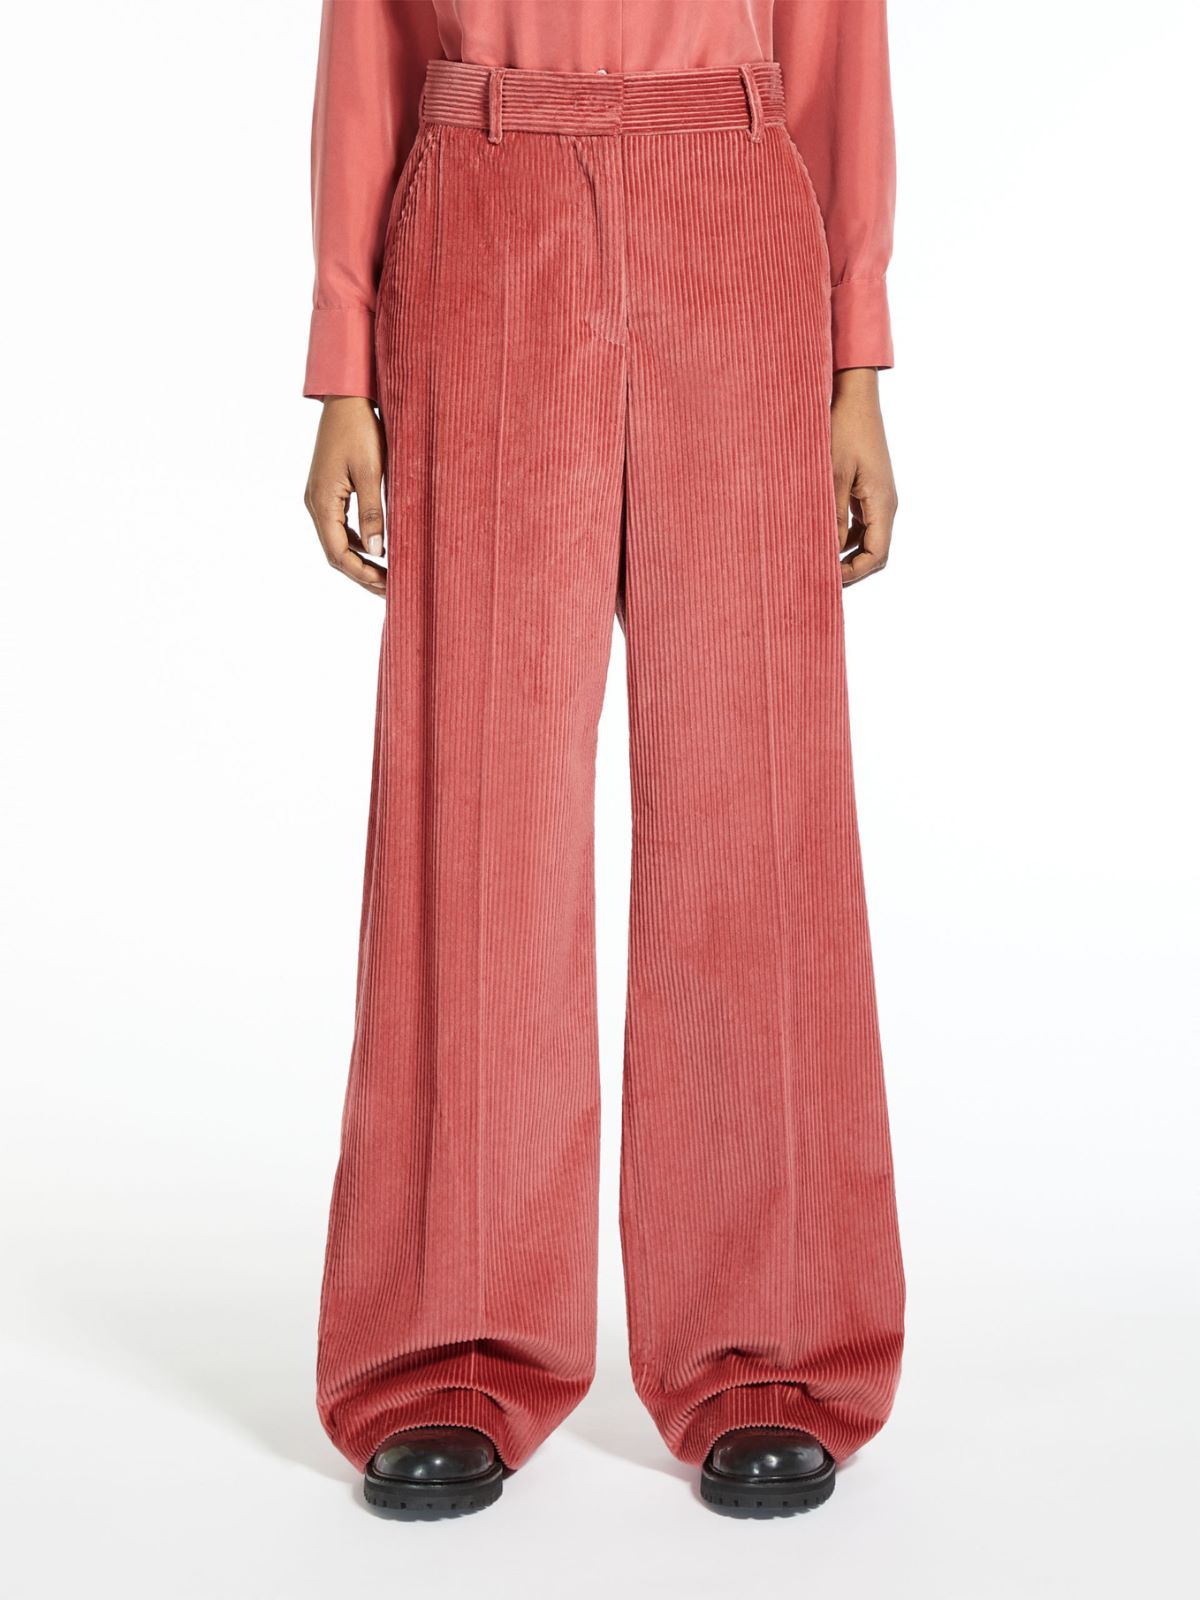 Cotton velvet trousers - BRICK RED - Weekend Max Mara - 2